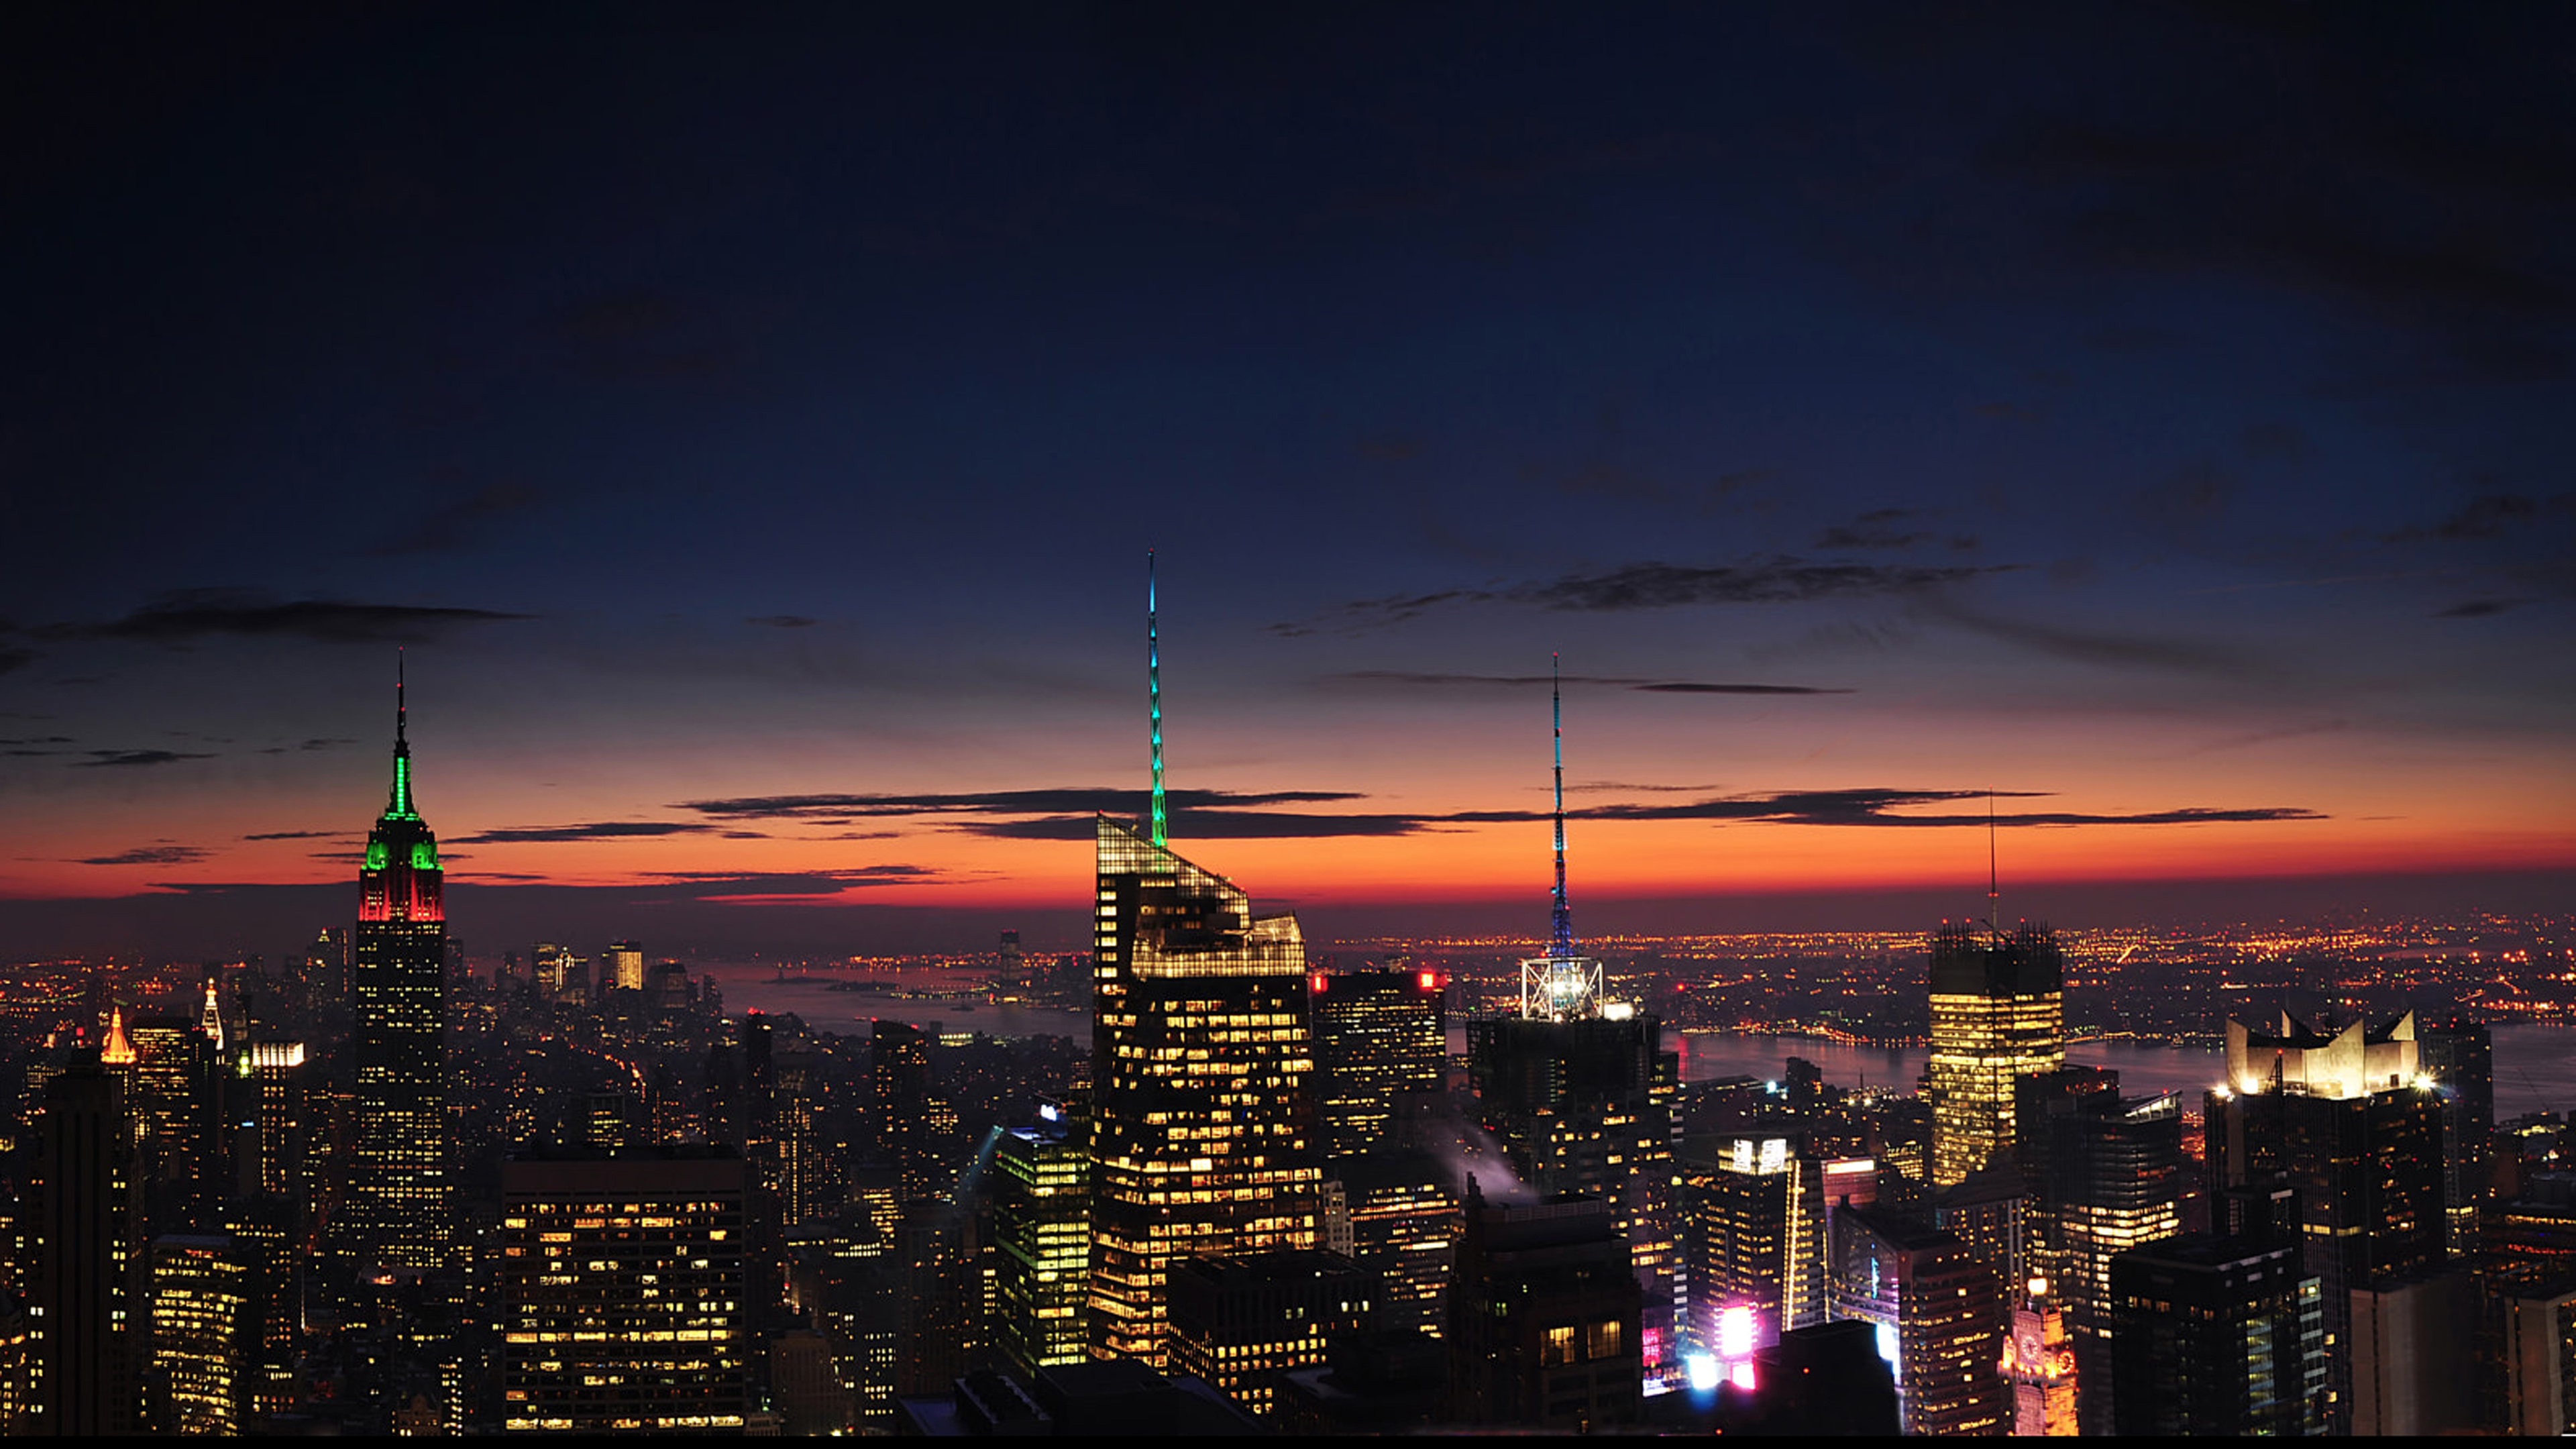 Manhattan United States Of America Sunset Dusk Red Sky On Horizon City  Landscape Hd Wallpaper For Desktop Laptop Tablet Mobile Phones And Tv  3840x2160 : 